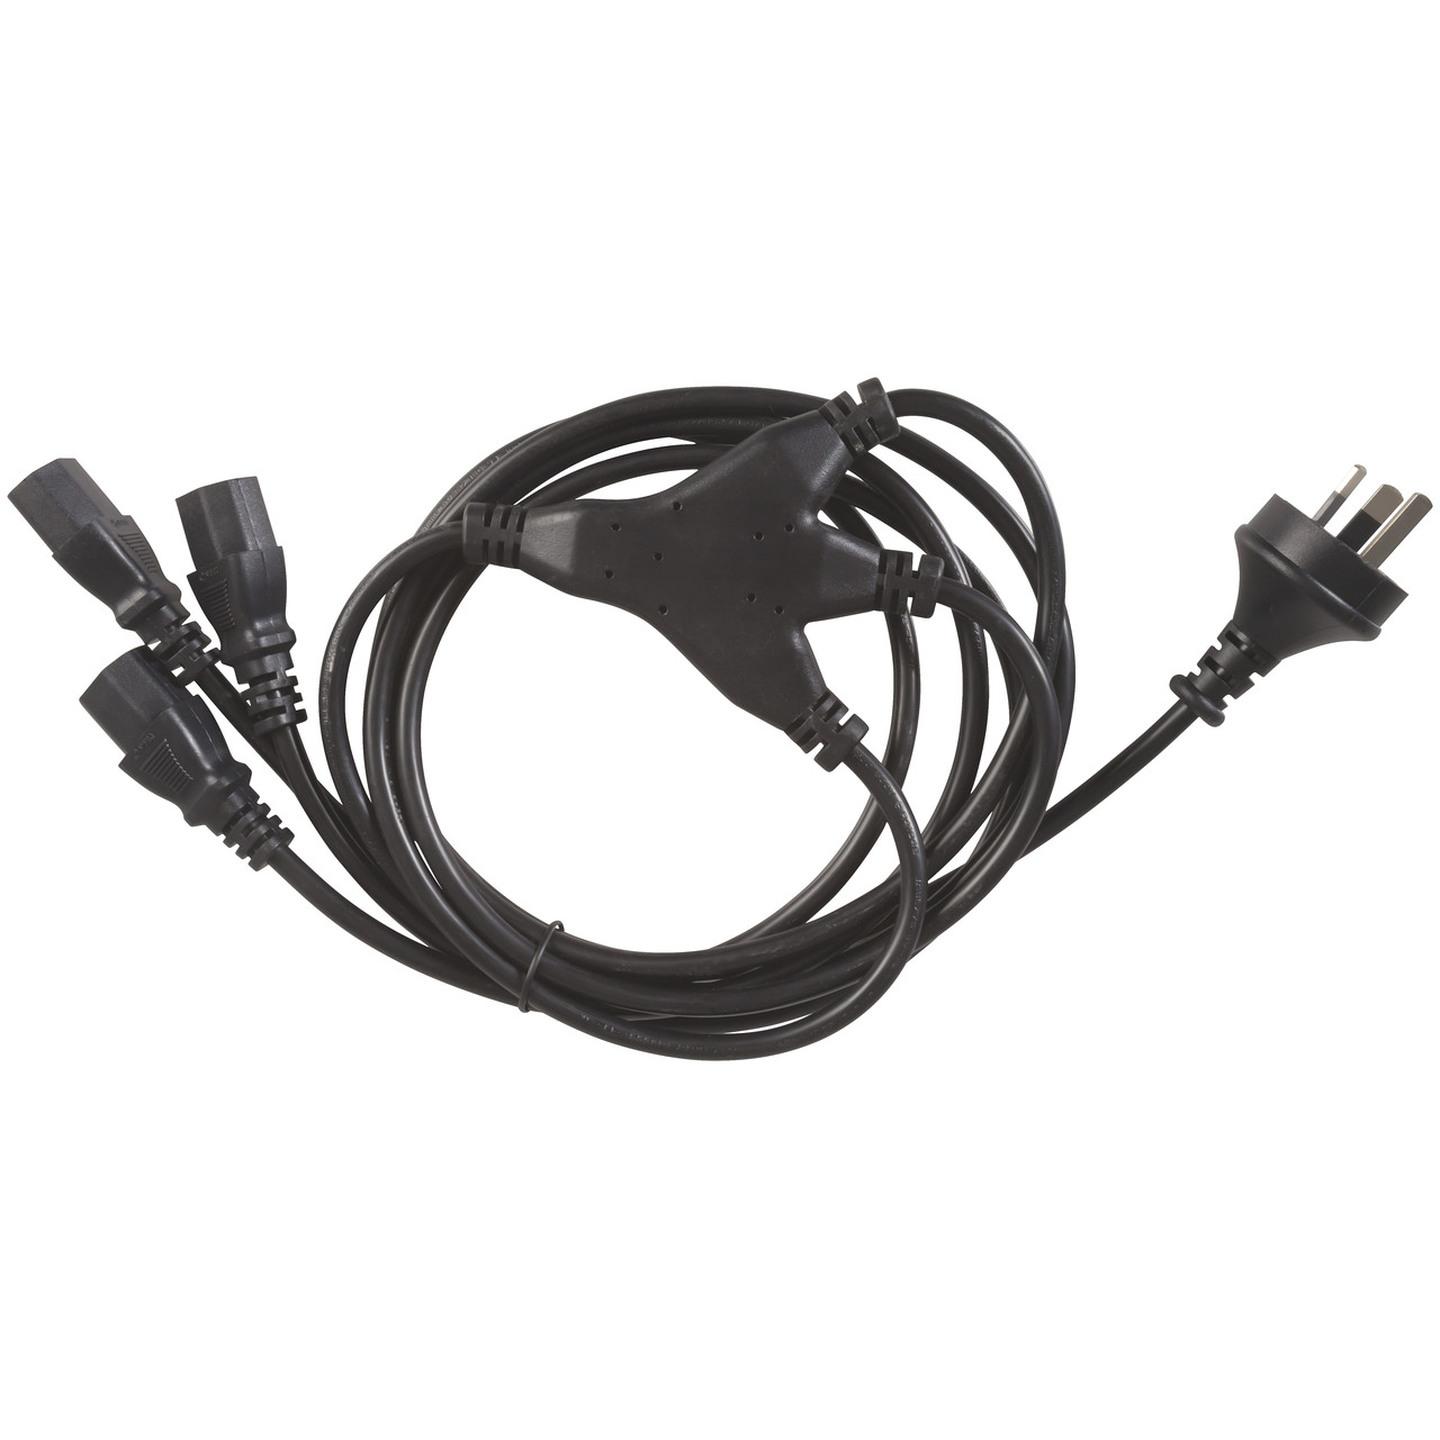 3-Outlet IEC Mains Cable